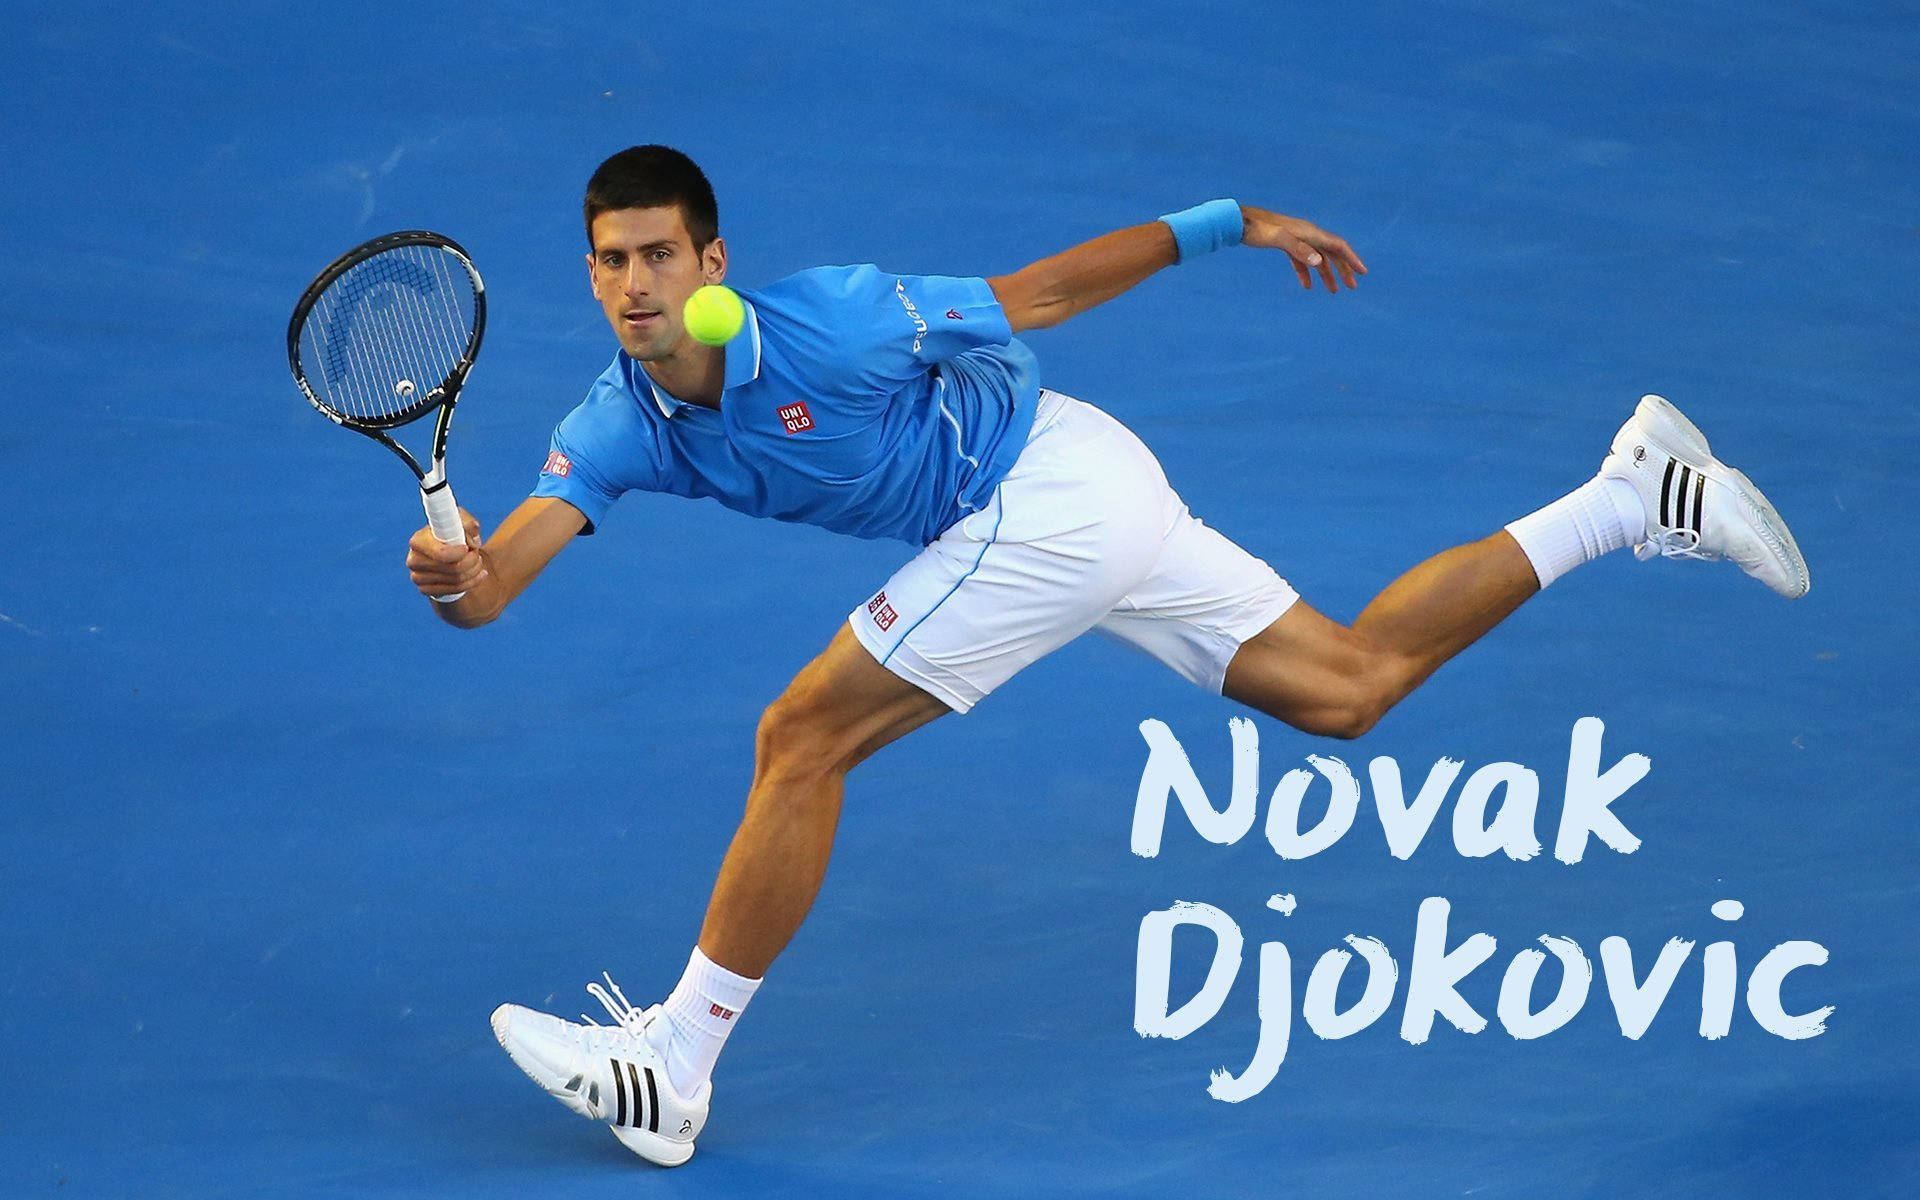 Novak Djokovic Tennis Poster wallpaper.